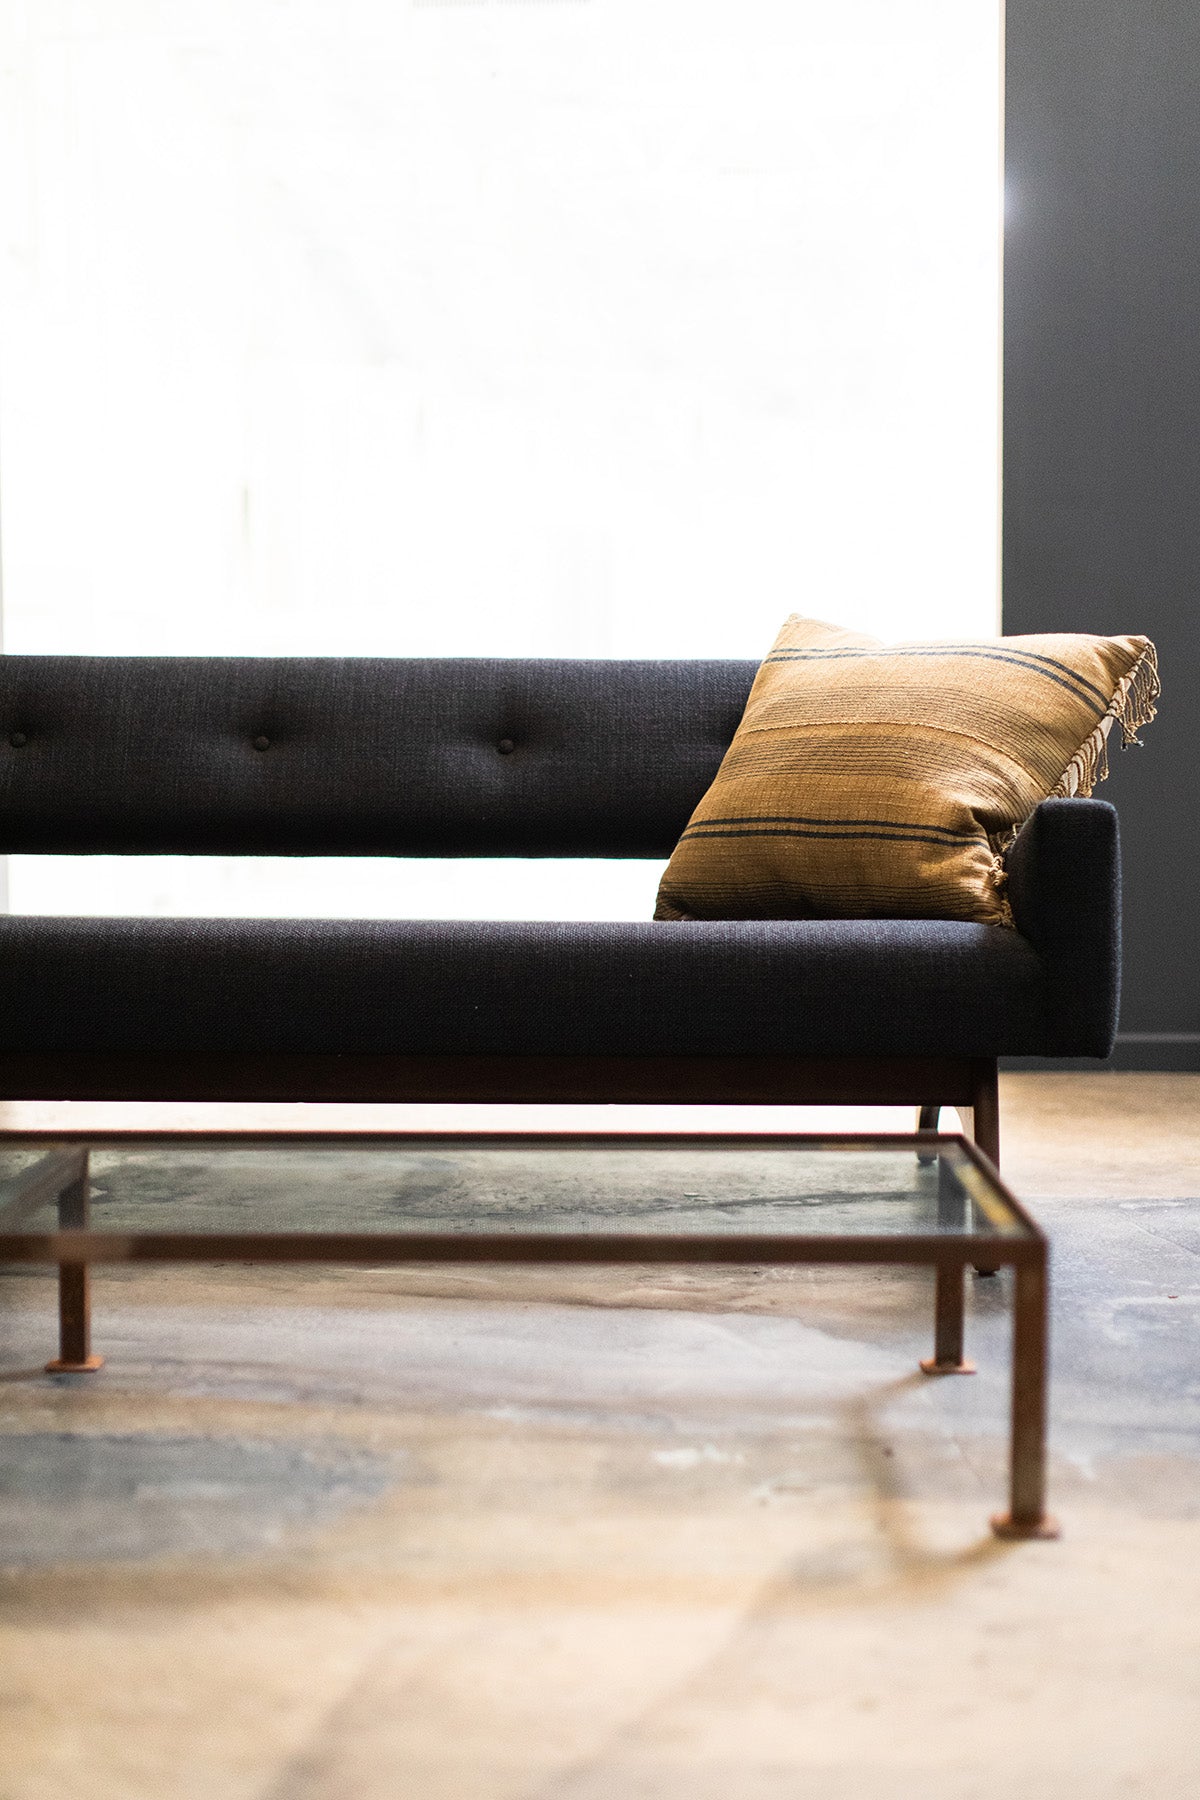 canadian-modern-sofa-1601-10